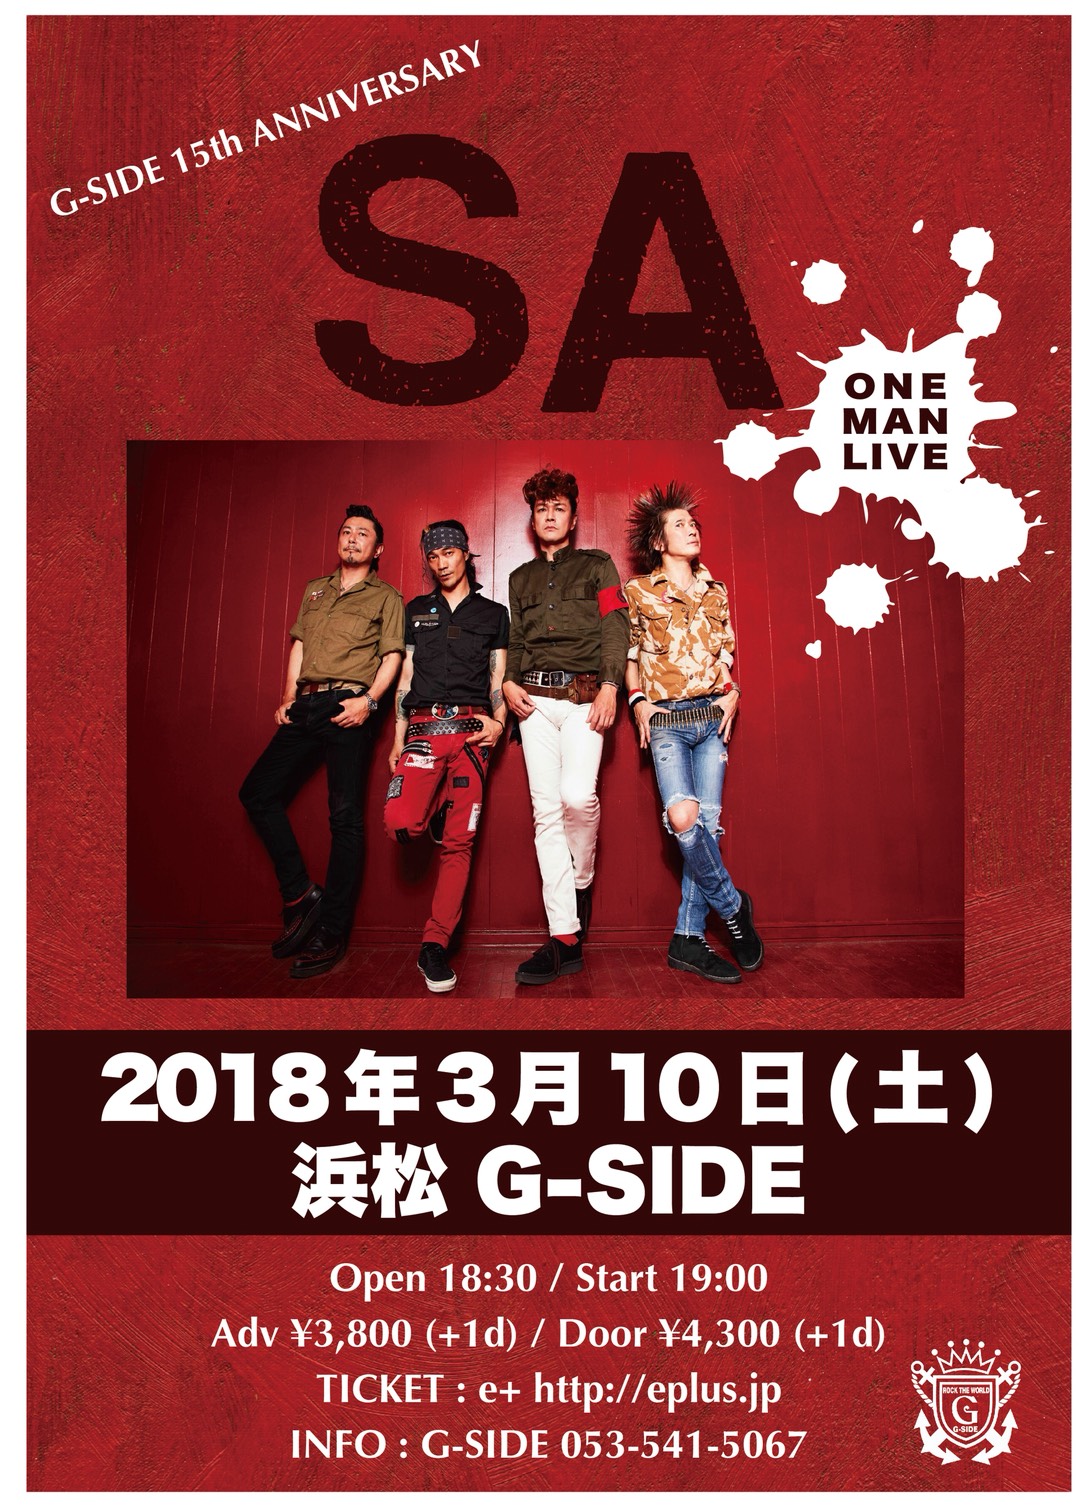 SA one-man live G-SIDE 15th ANNIVERSARY